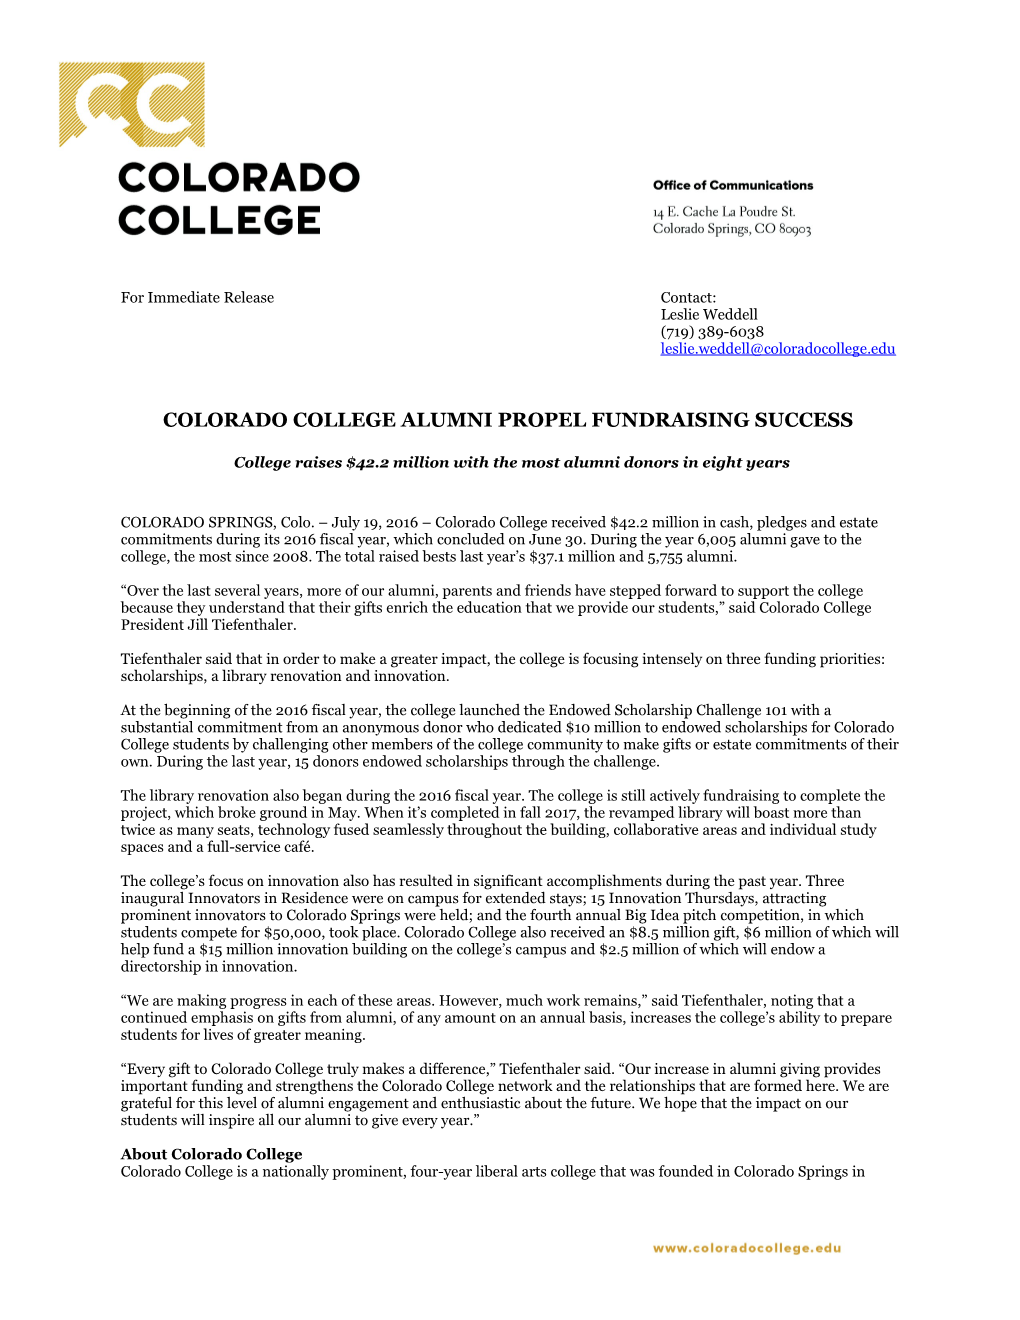 Colorado College Alumni Propel Fundraising Success